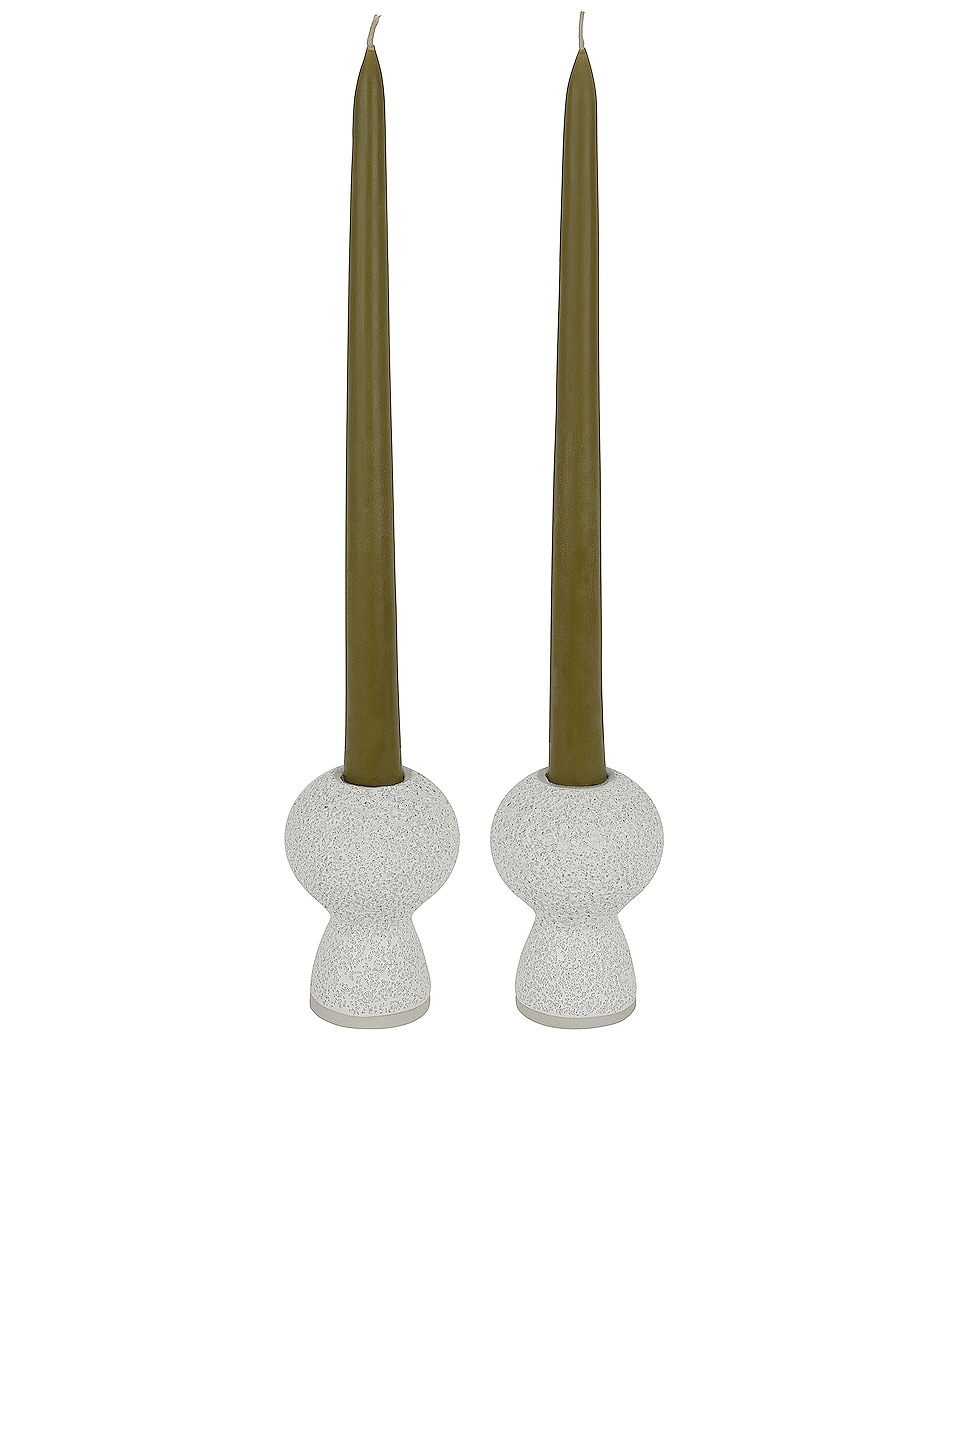 Image 1 of Marloe Marloe Short Pair Candleholder in Lava & Bone